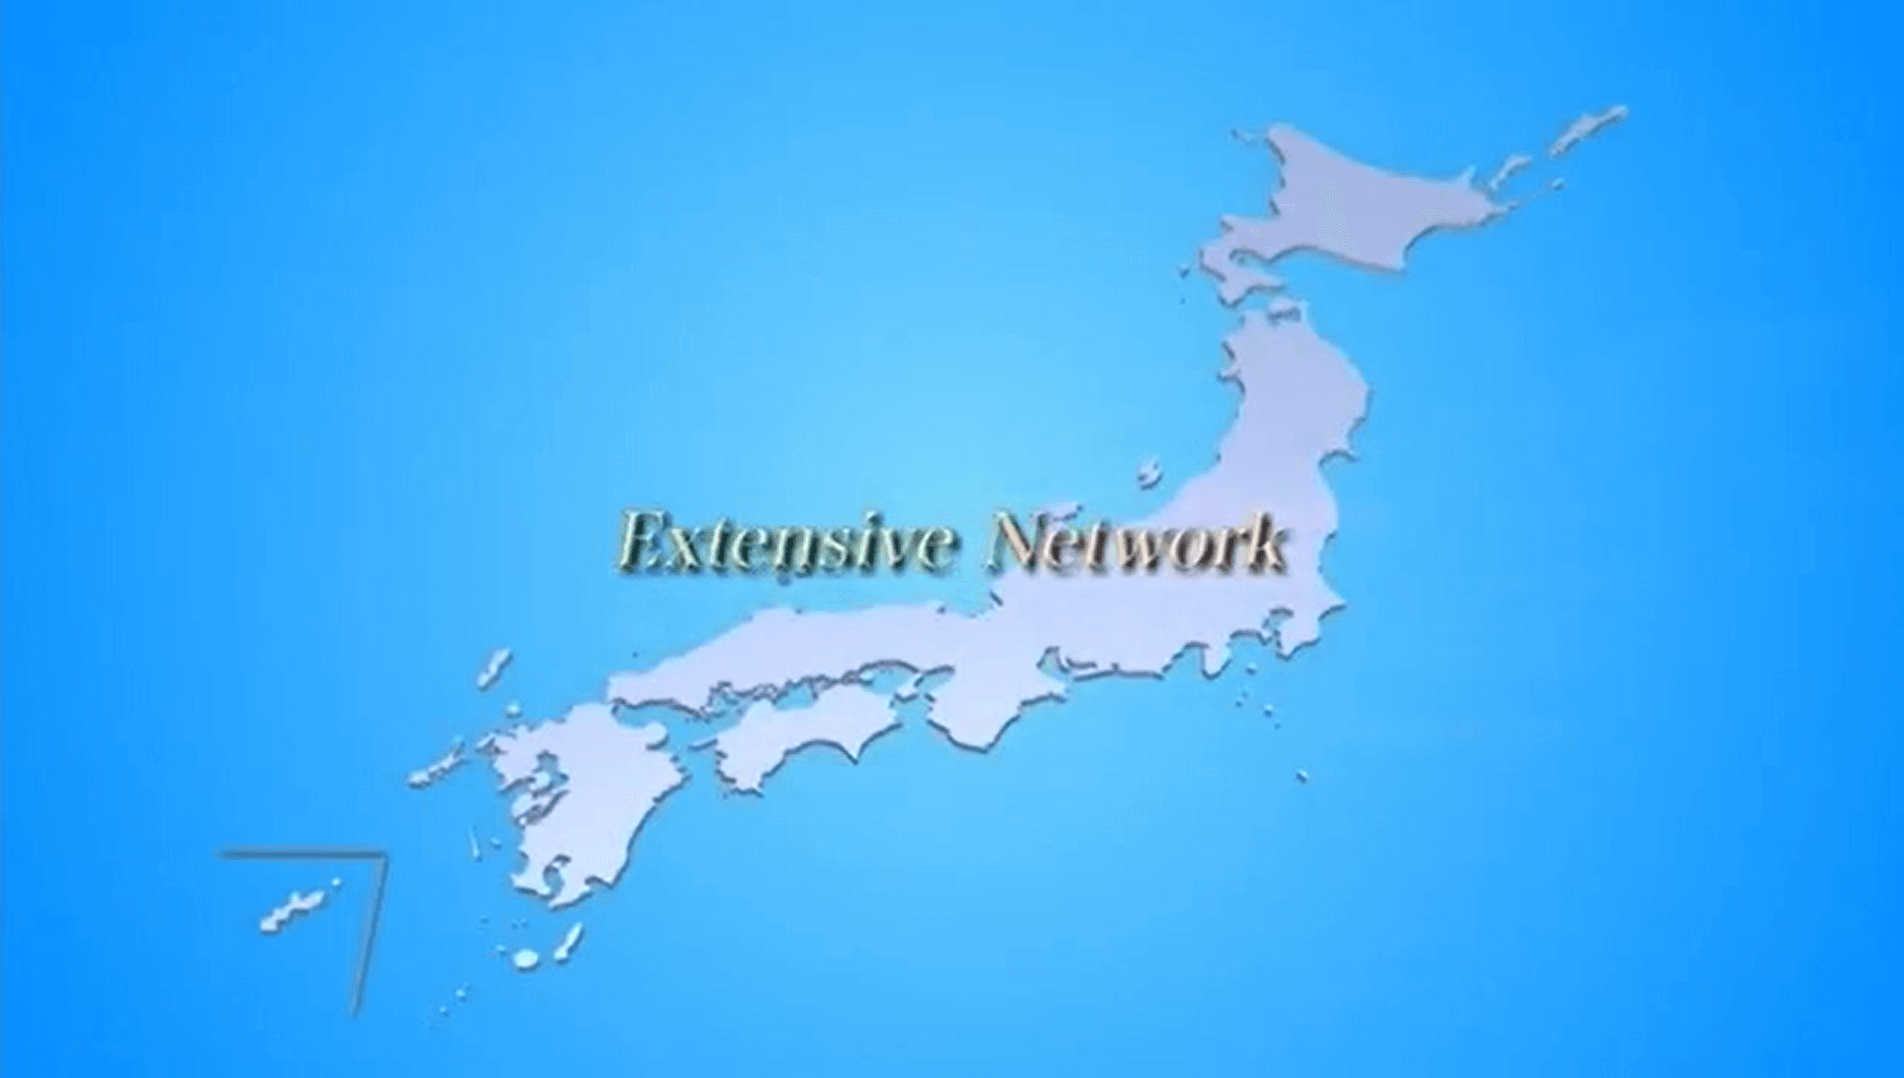 Extensive Network